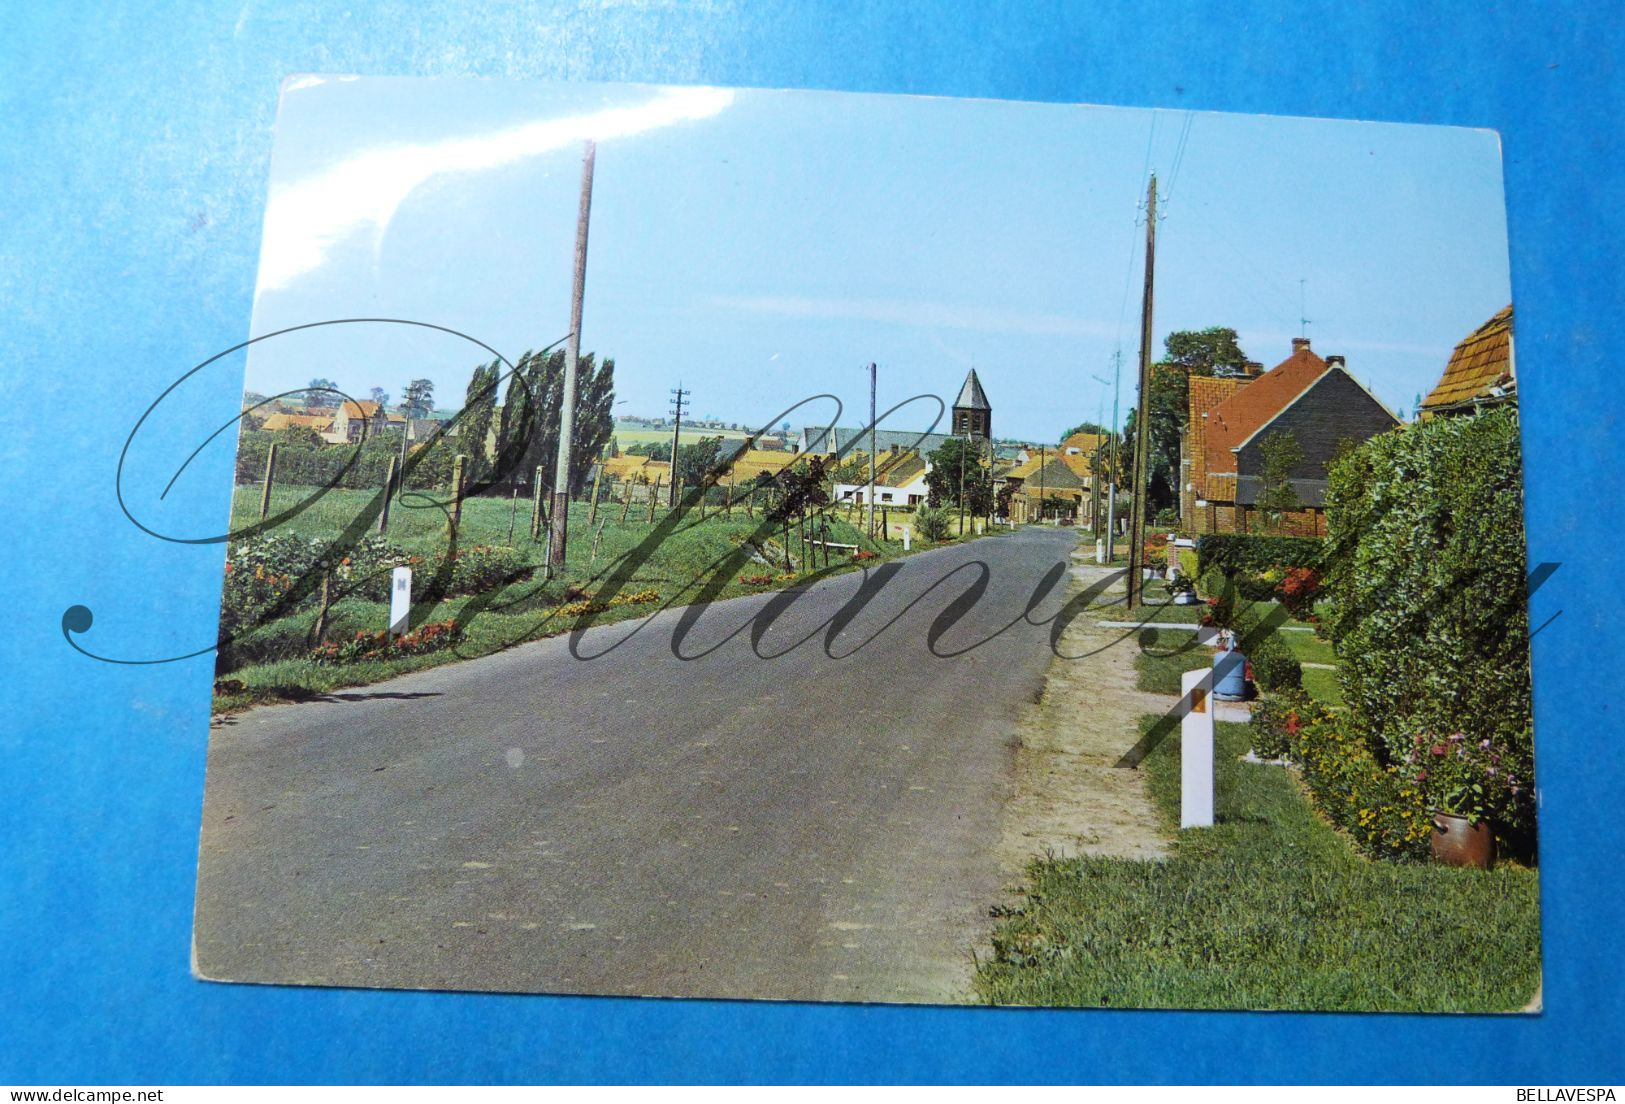 West-Outer lot x 14 pc. /st. postkaarten cartes postales Kosmos Eksternest Rodeberg enz.